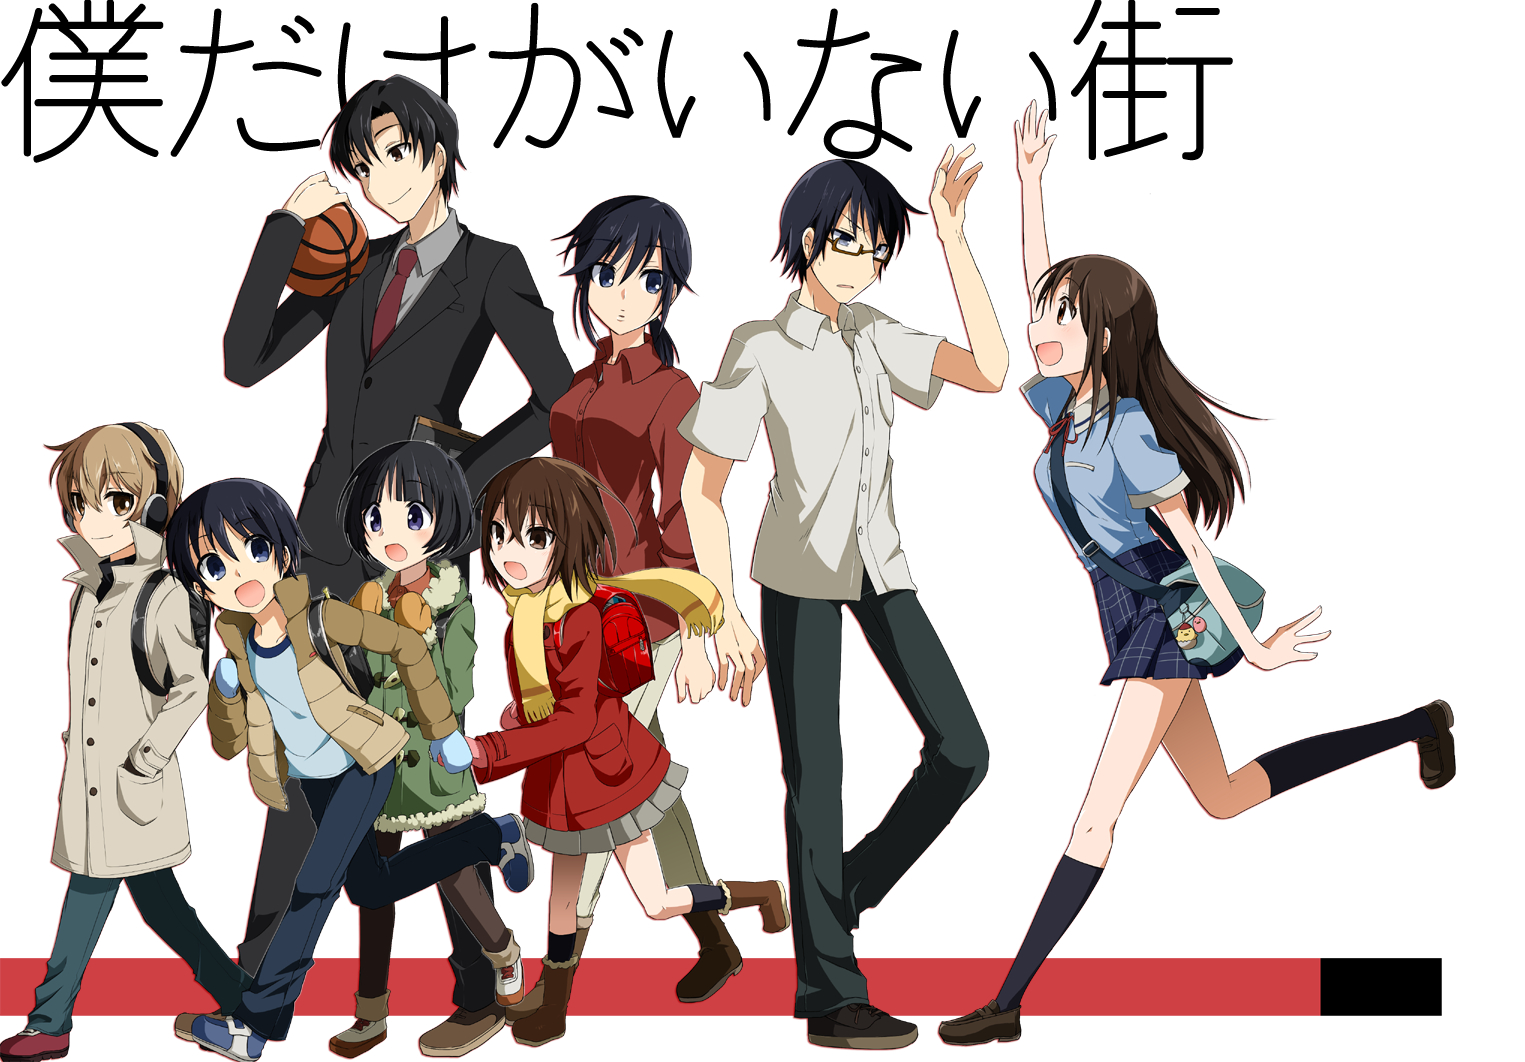 Erased Kei Sanbe Anime Animação ao vivo, Anime, mangá, personagem